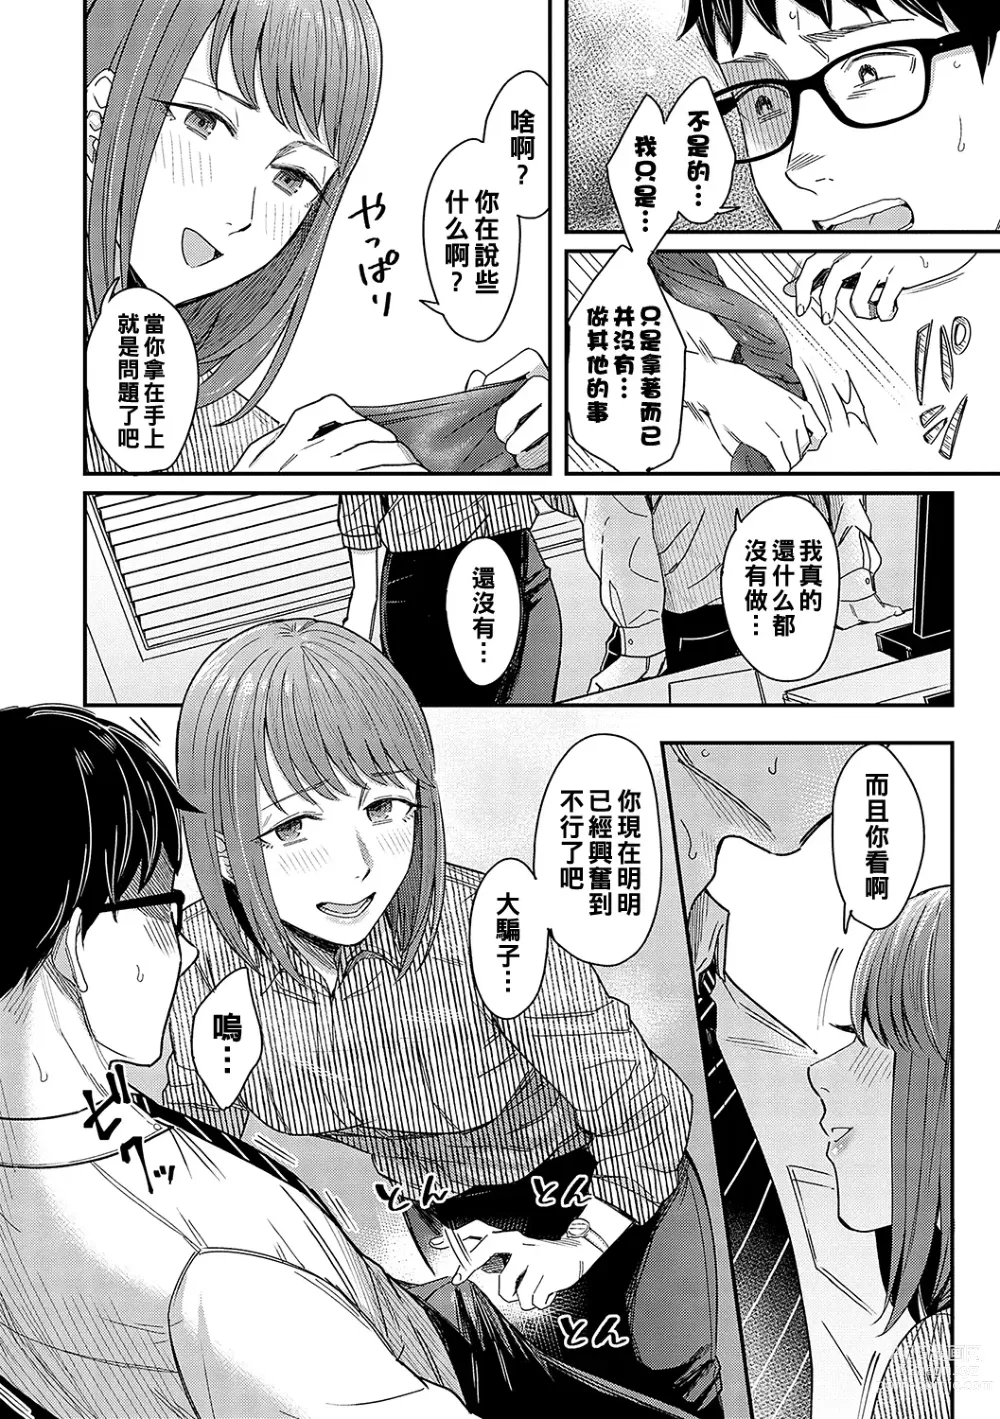 Page 6 of manga Magasashi Kanojo ga Sasayaku